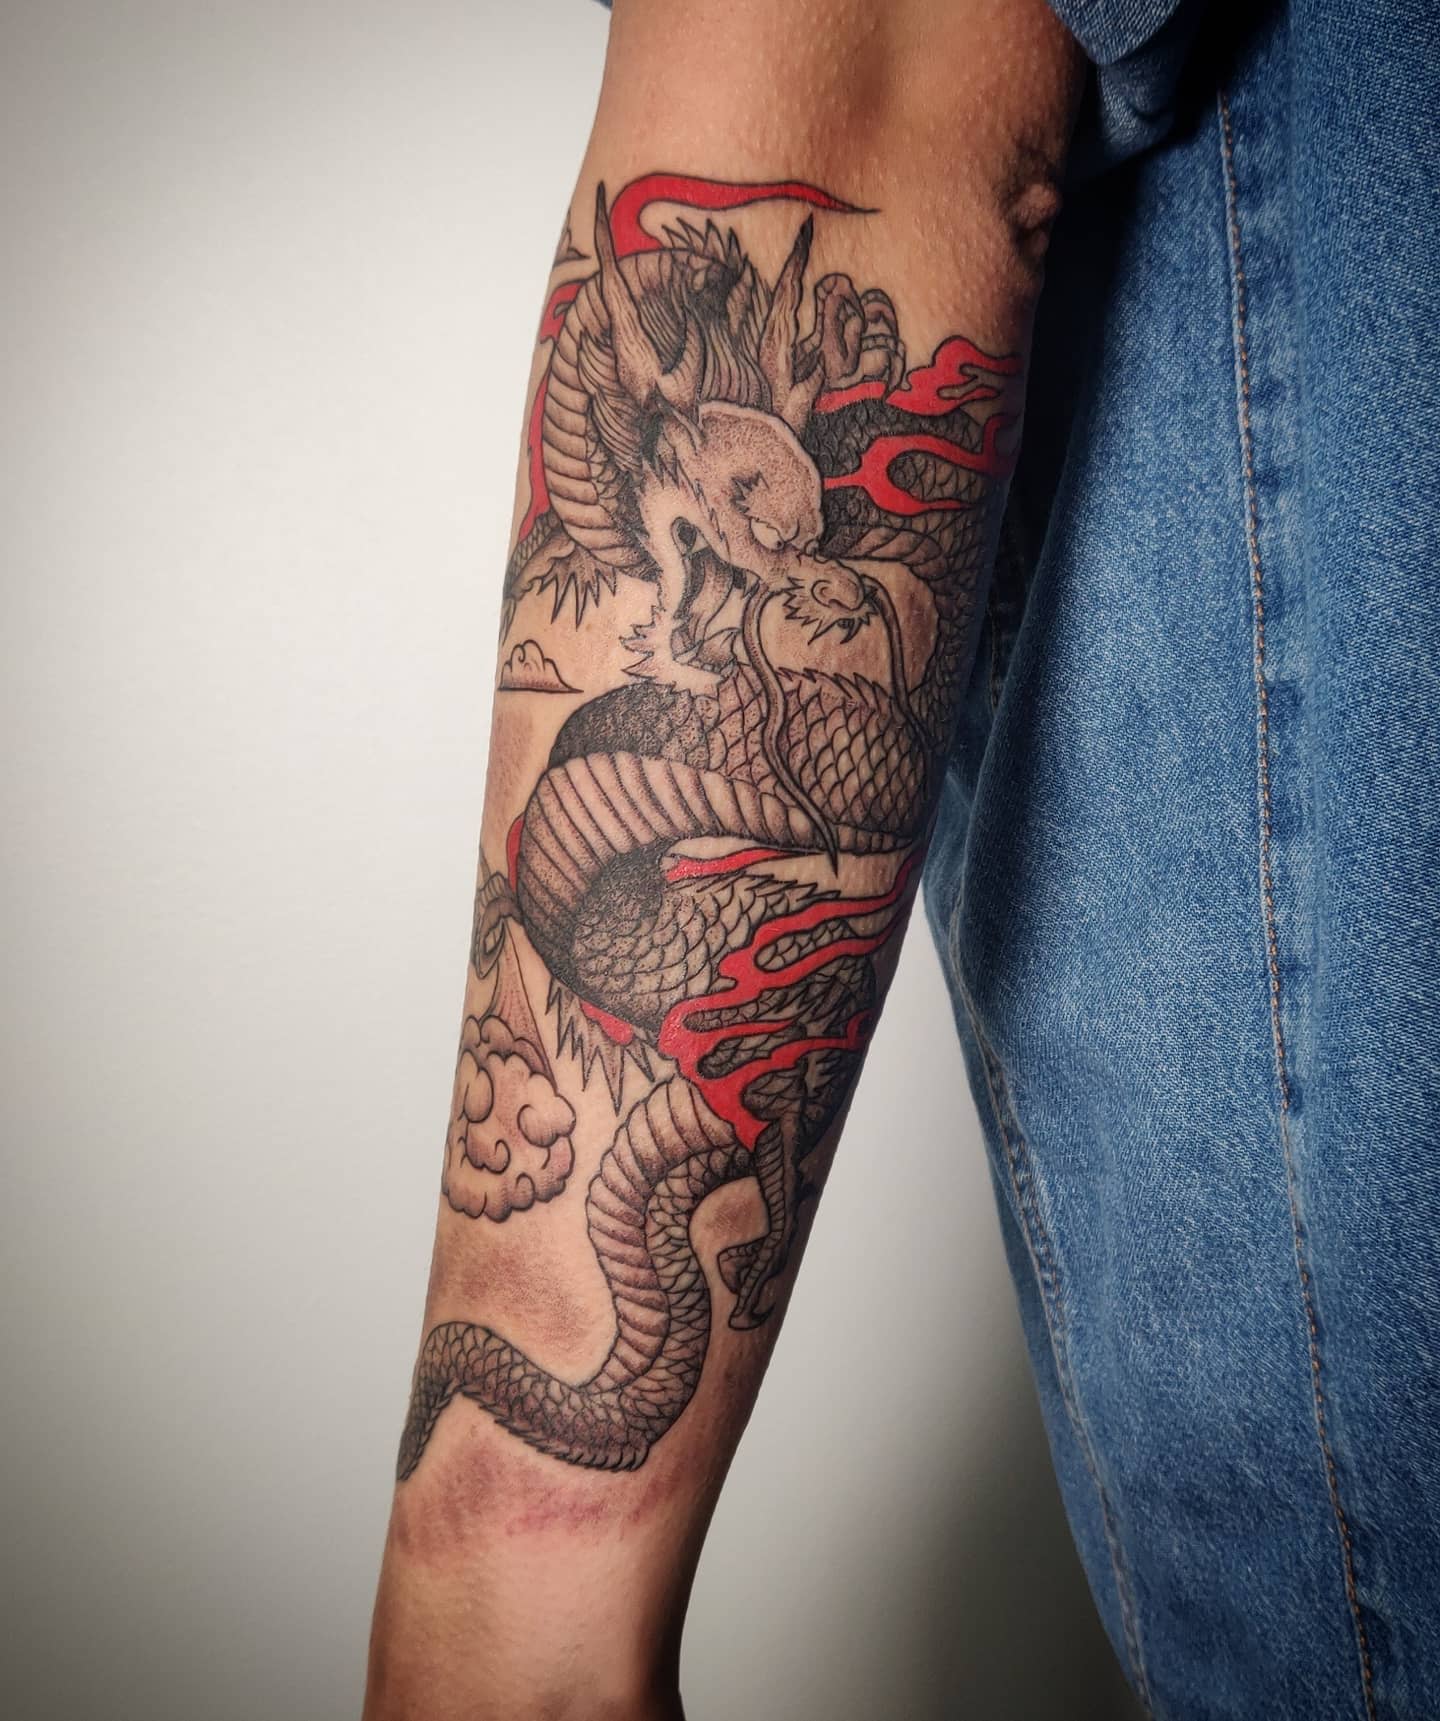 Gristle TattooArt on Twitter Dragon ball by fanwuink  httpstcoTXbChNay9q  Twitter